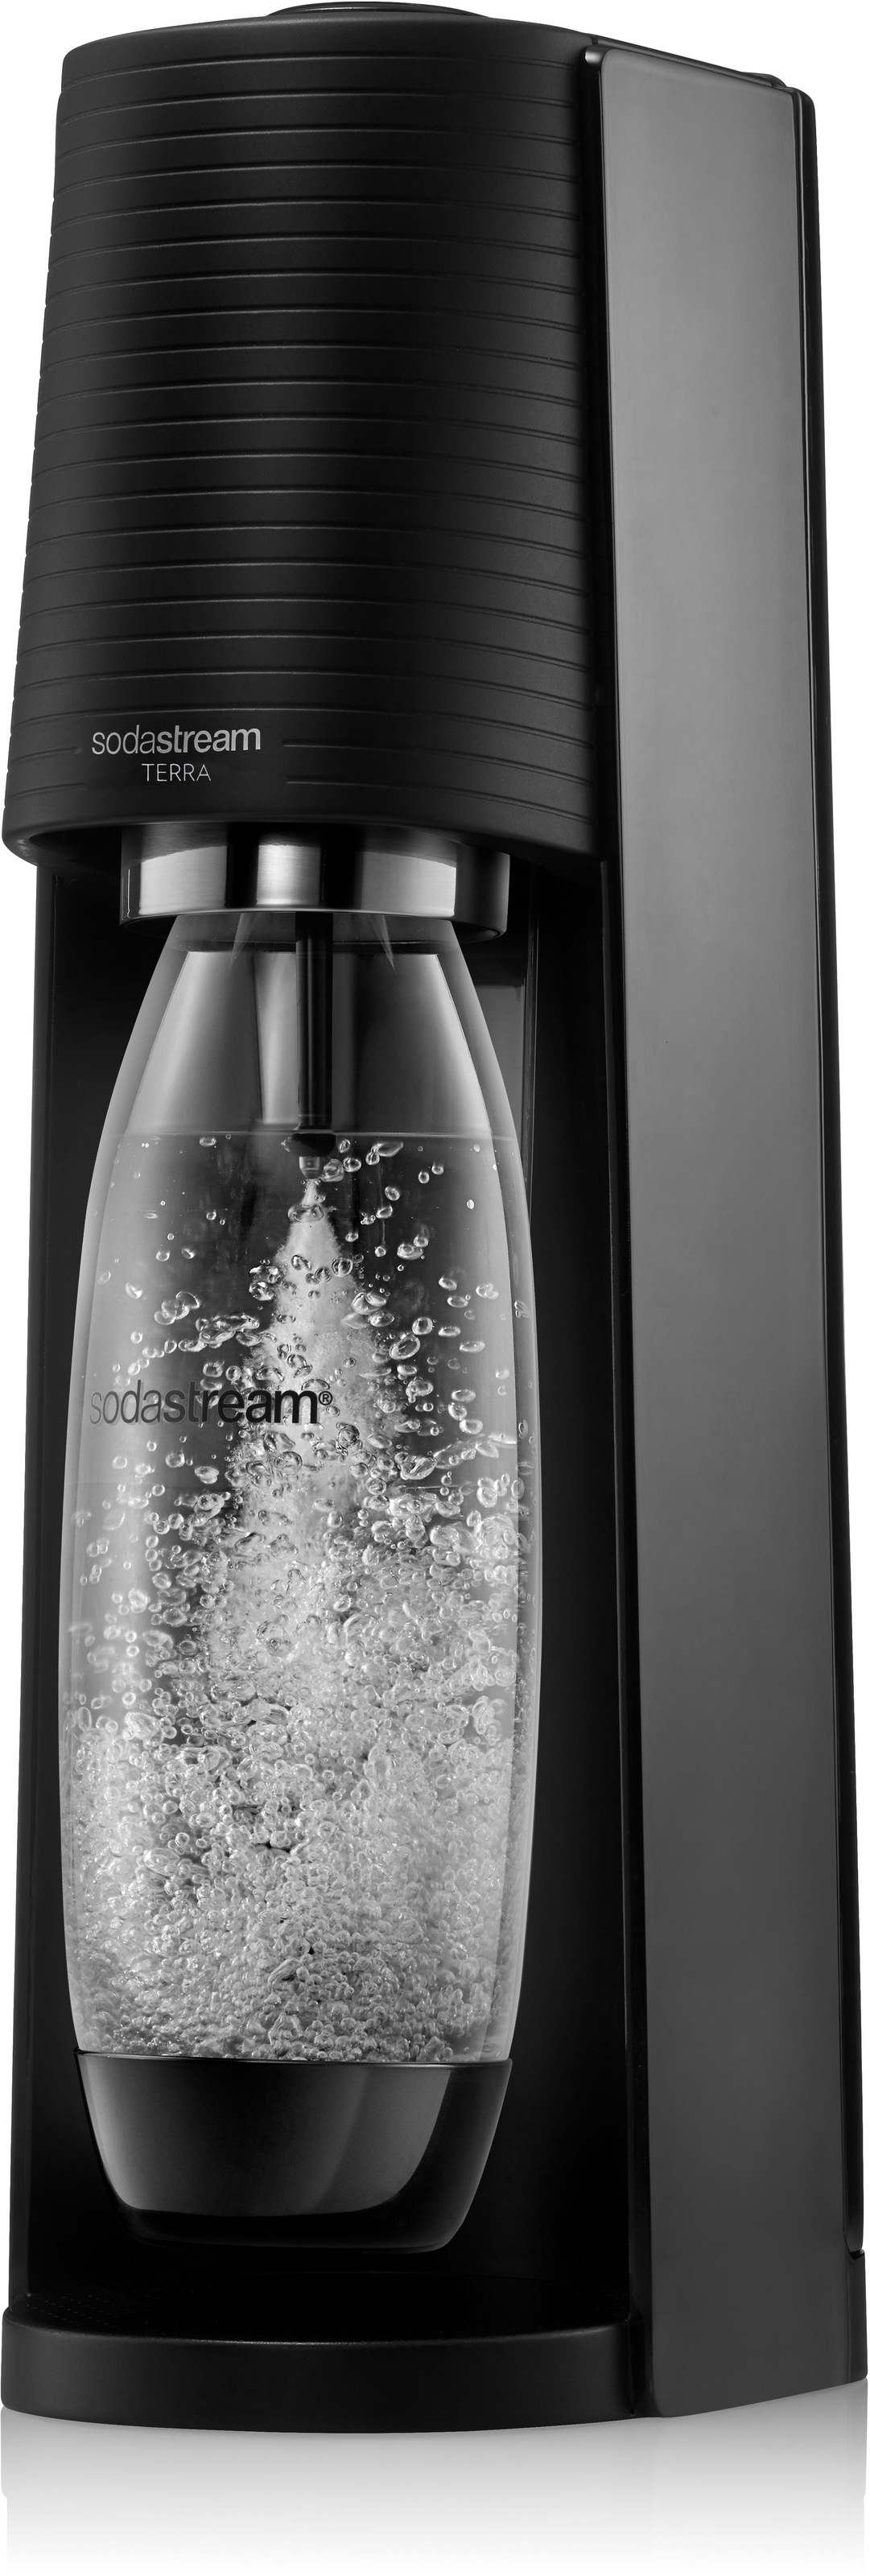 SodaStream Wassersprudler »TERRA Bundle Vorteilspack«, (Set, 7 tlg.)